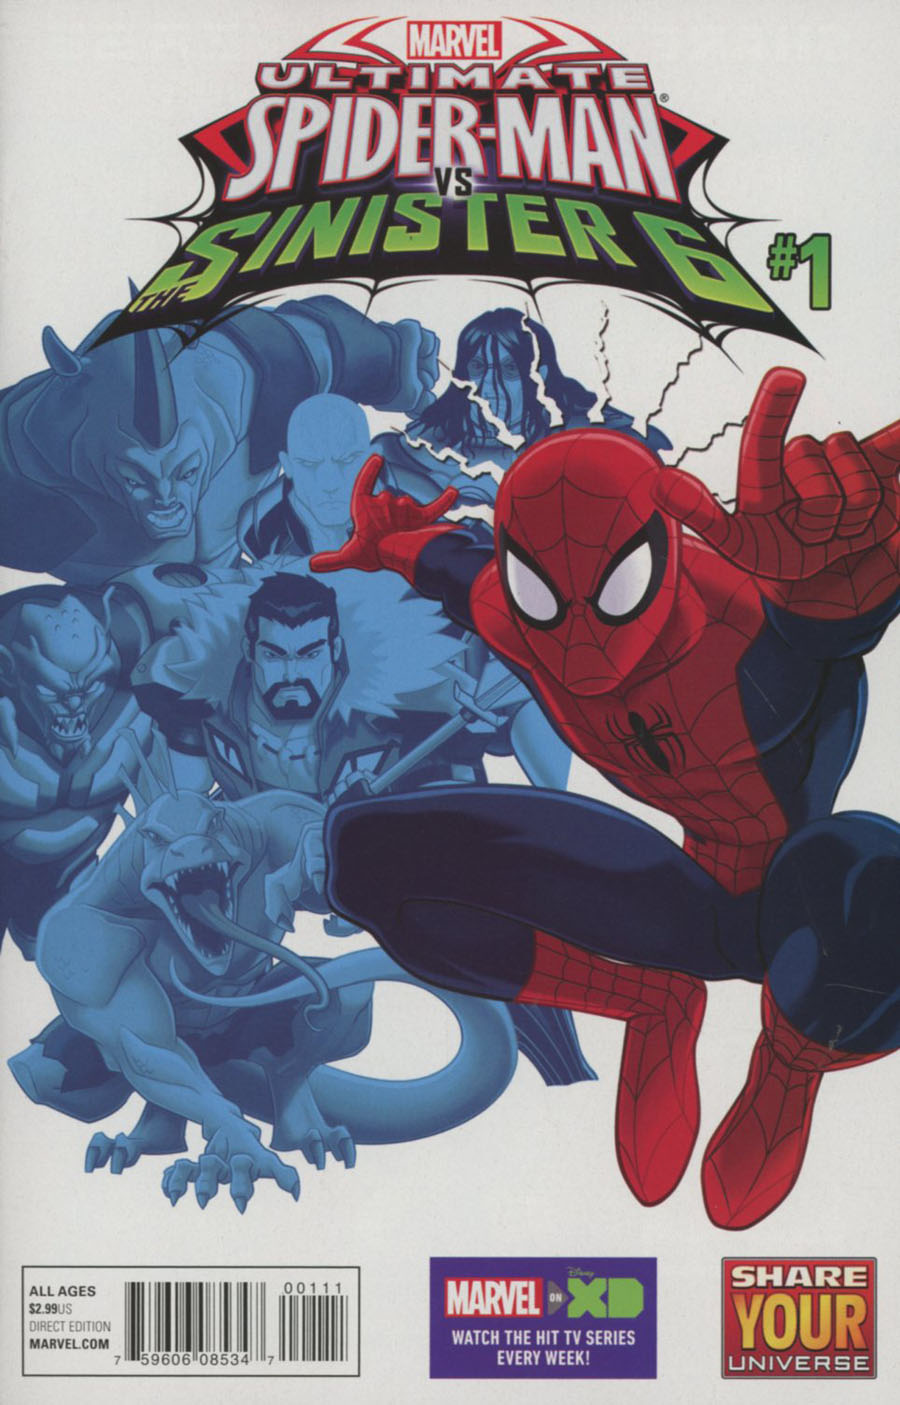 Marvel Universe Ultimate Spider-Man vs Sinister Six #1